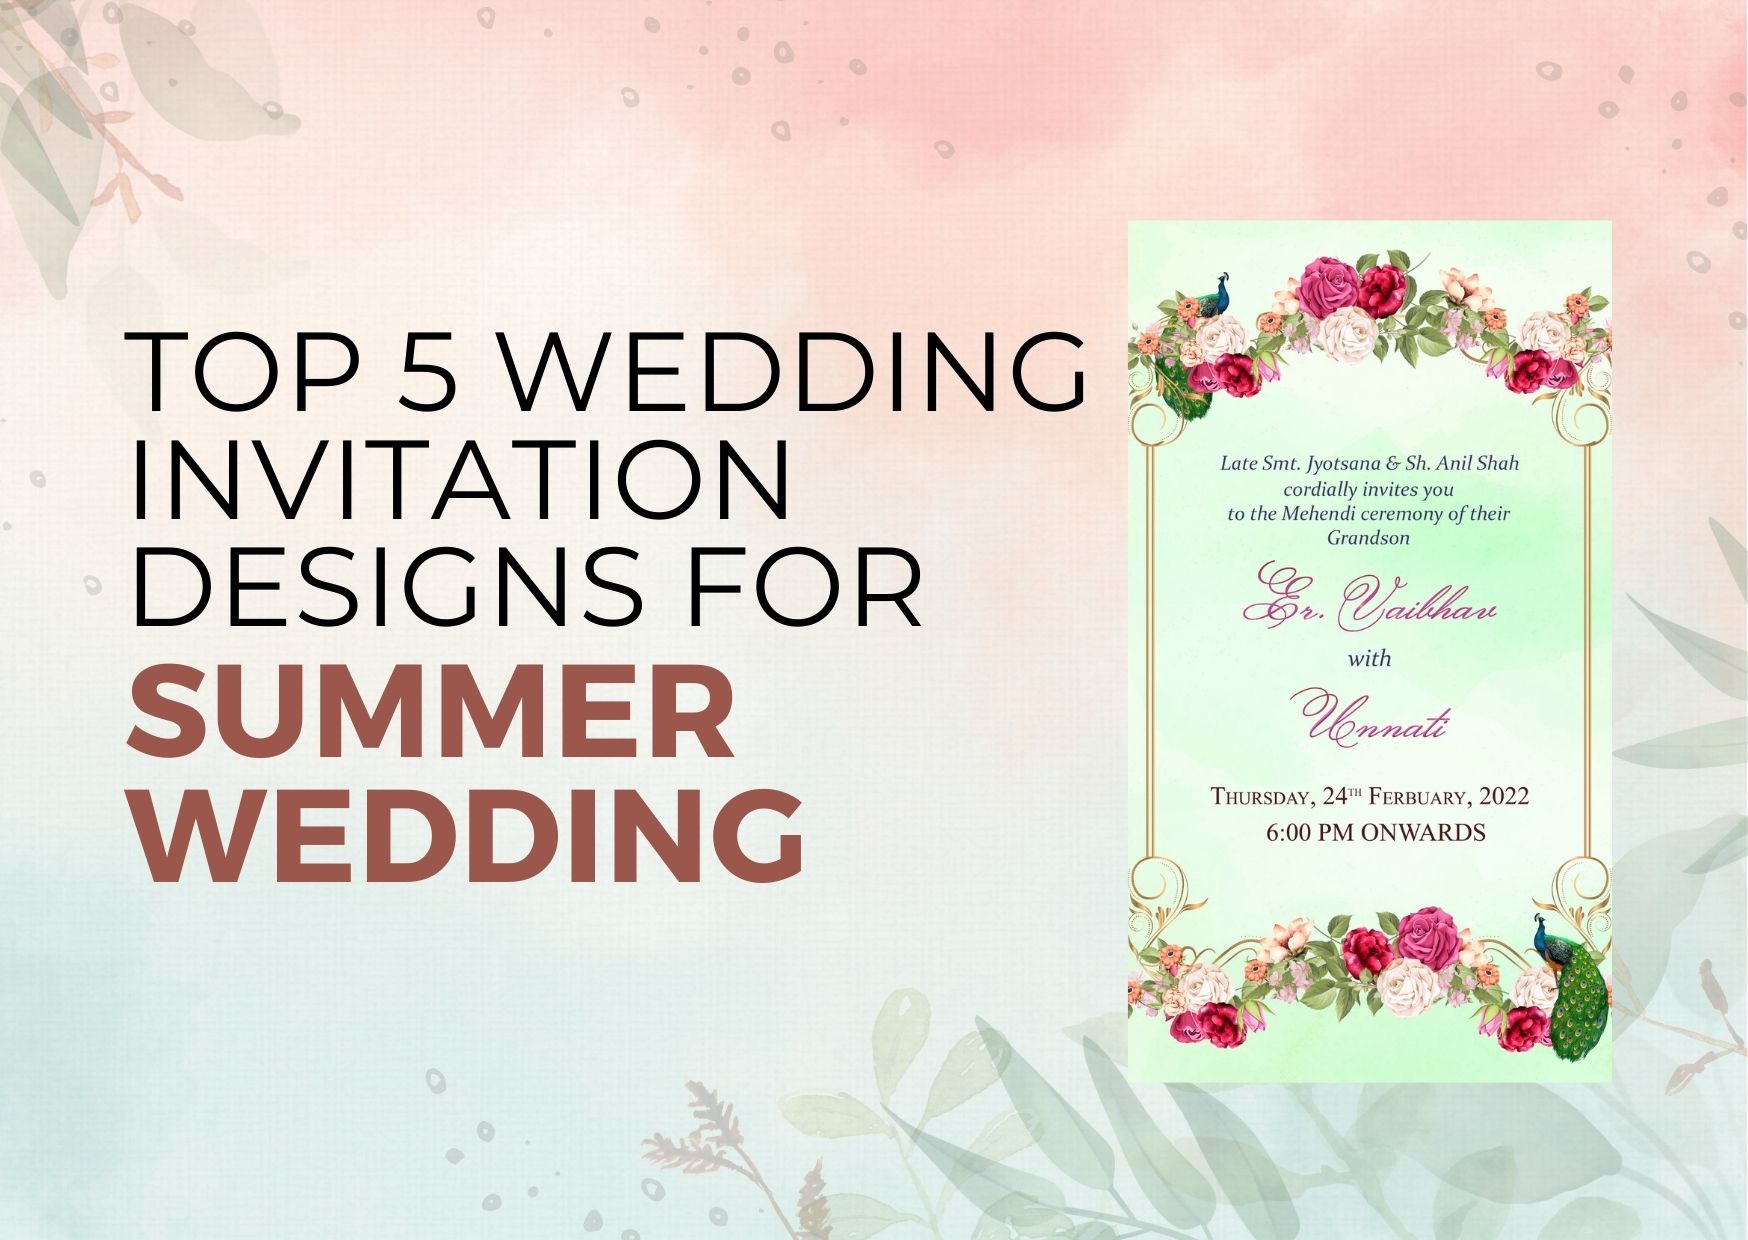 Top 5 Wedding Invitation Designs for Summer Wedding